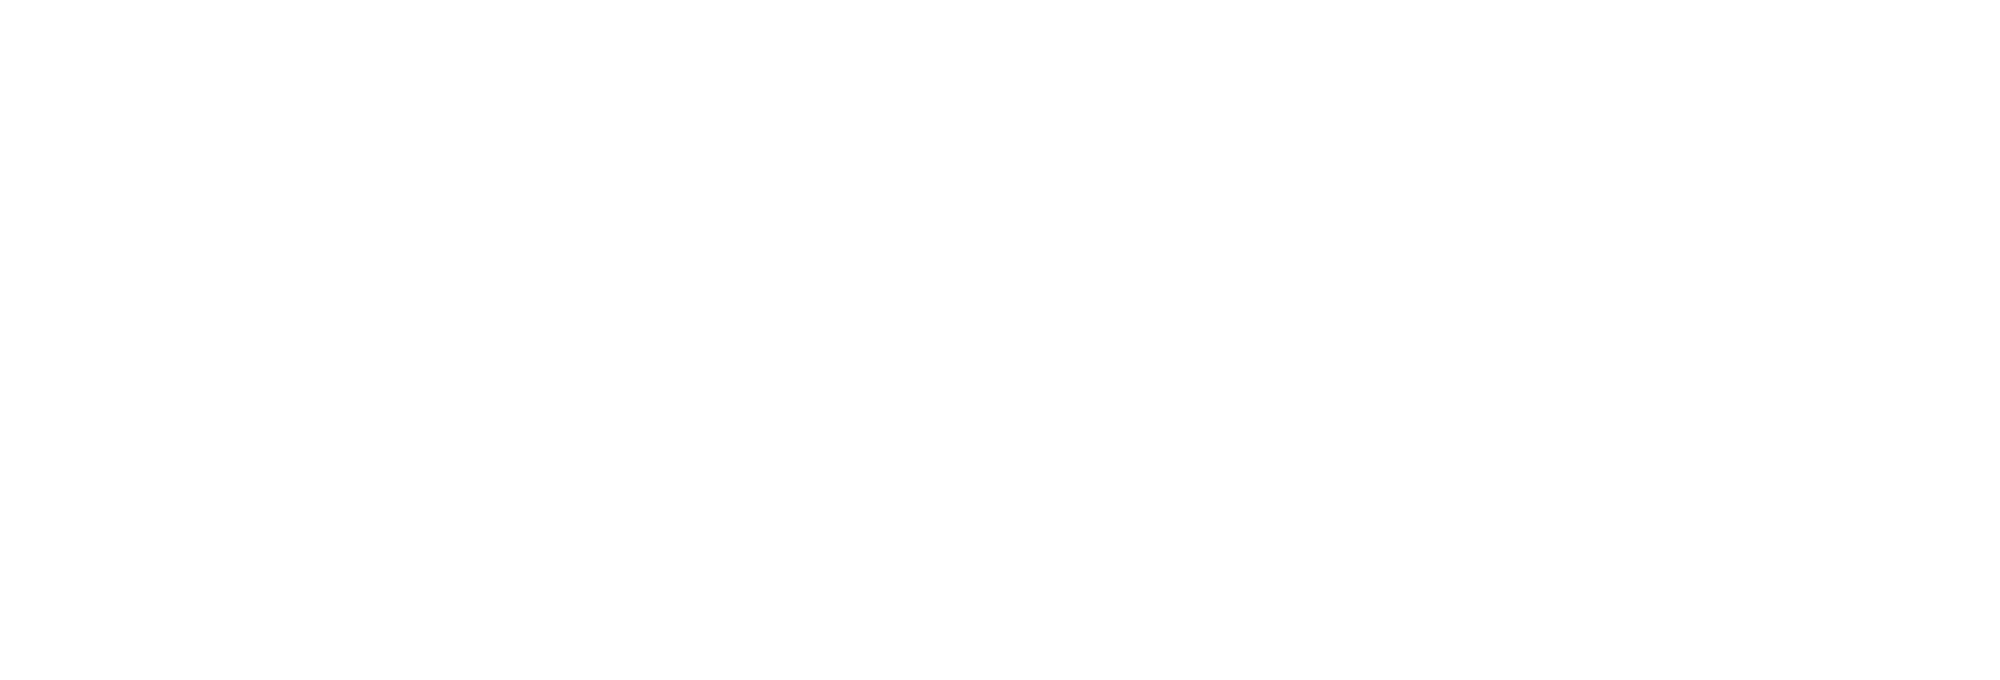 Serena Bay logo